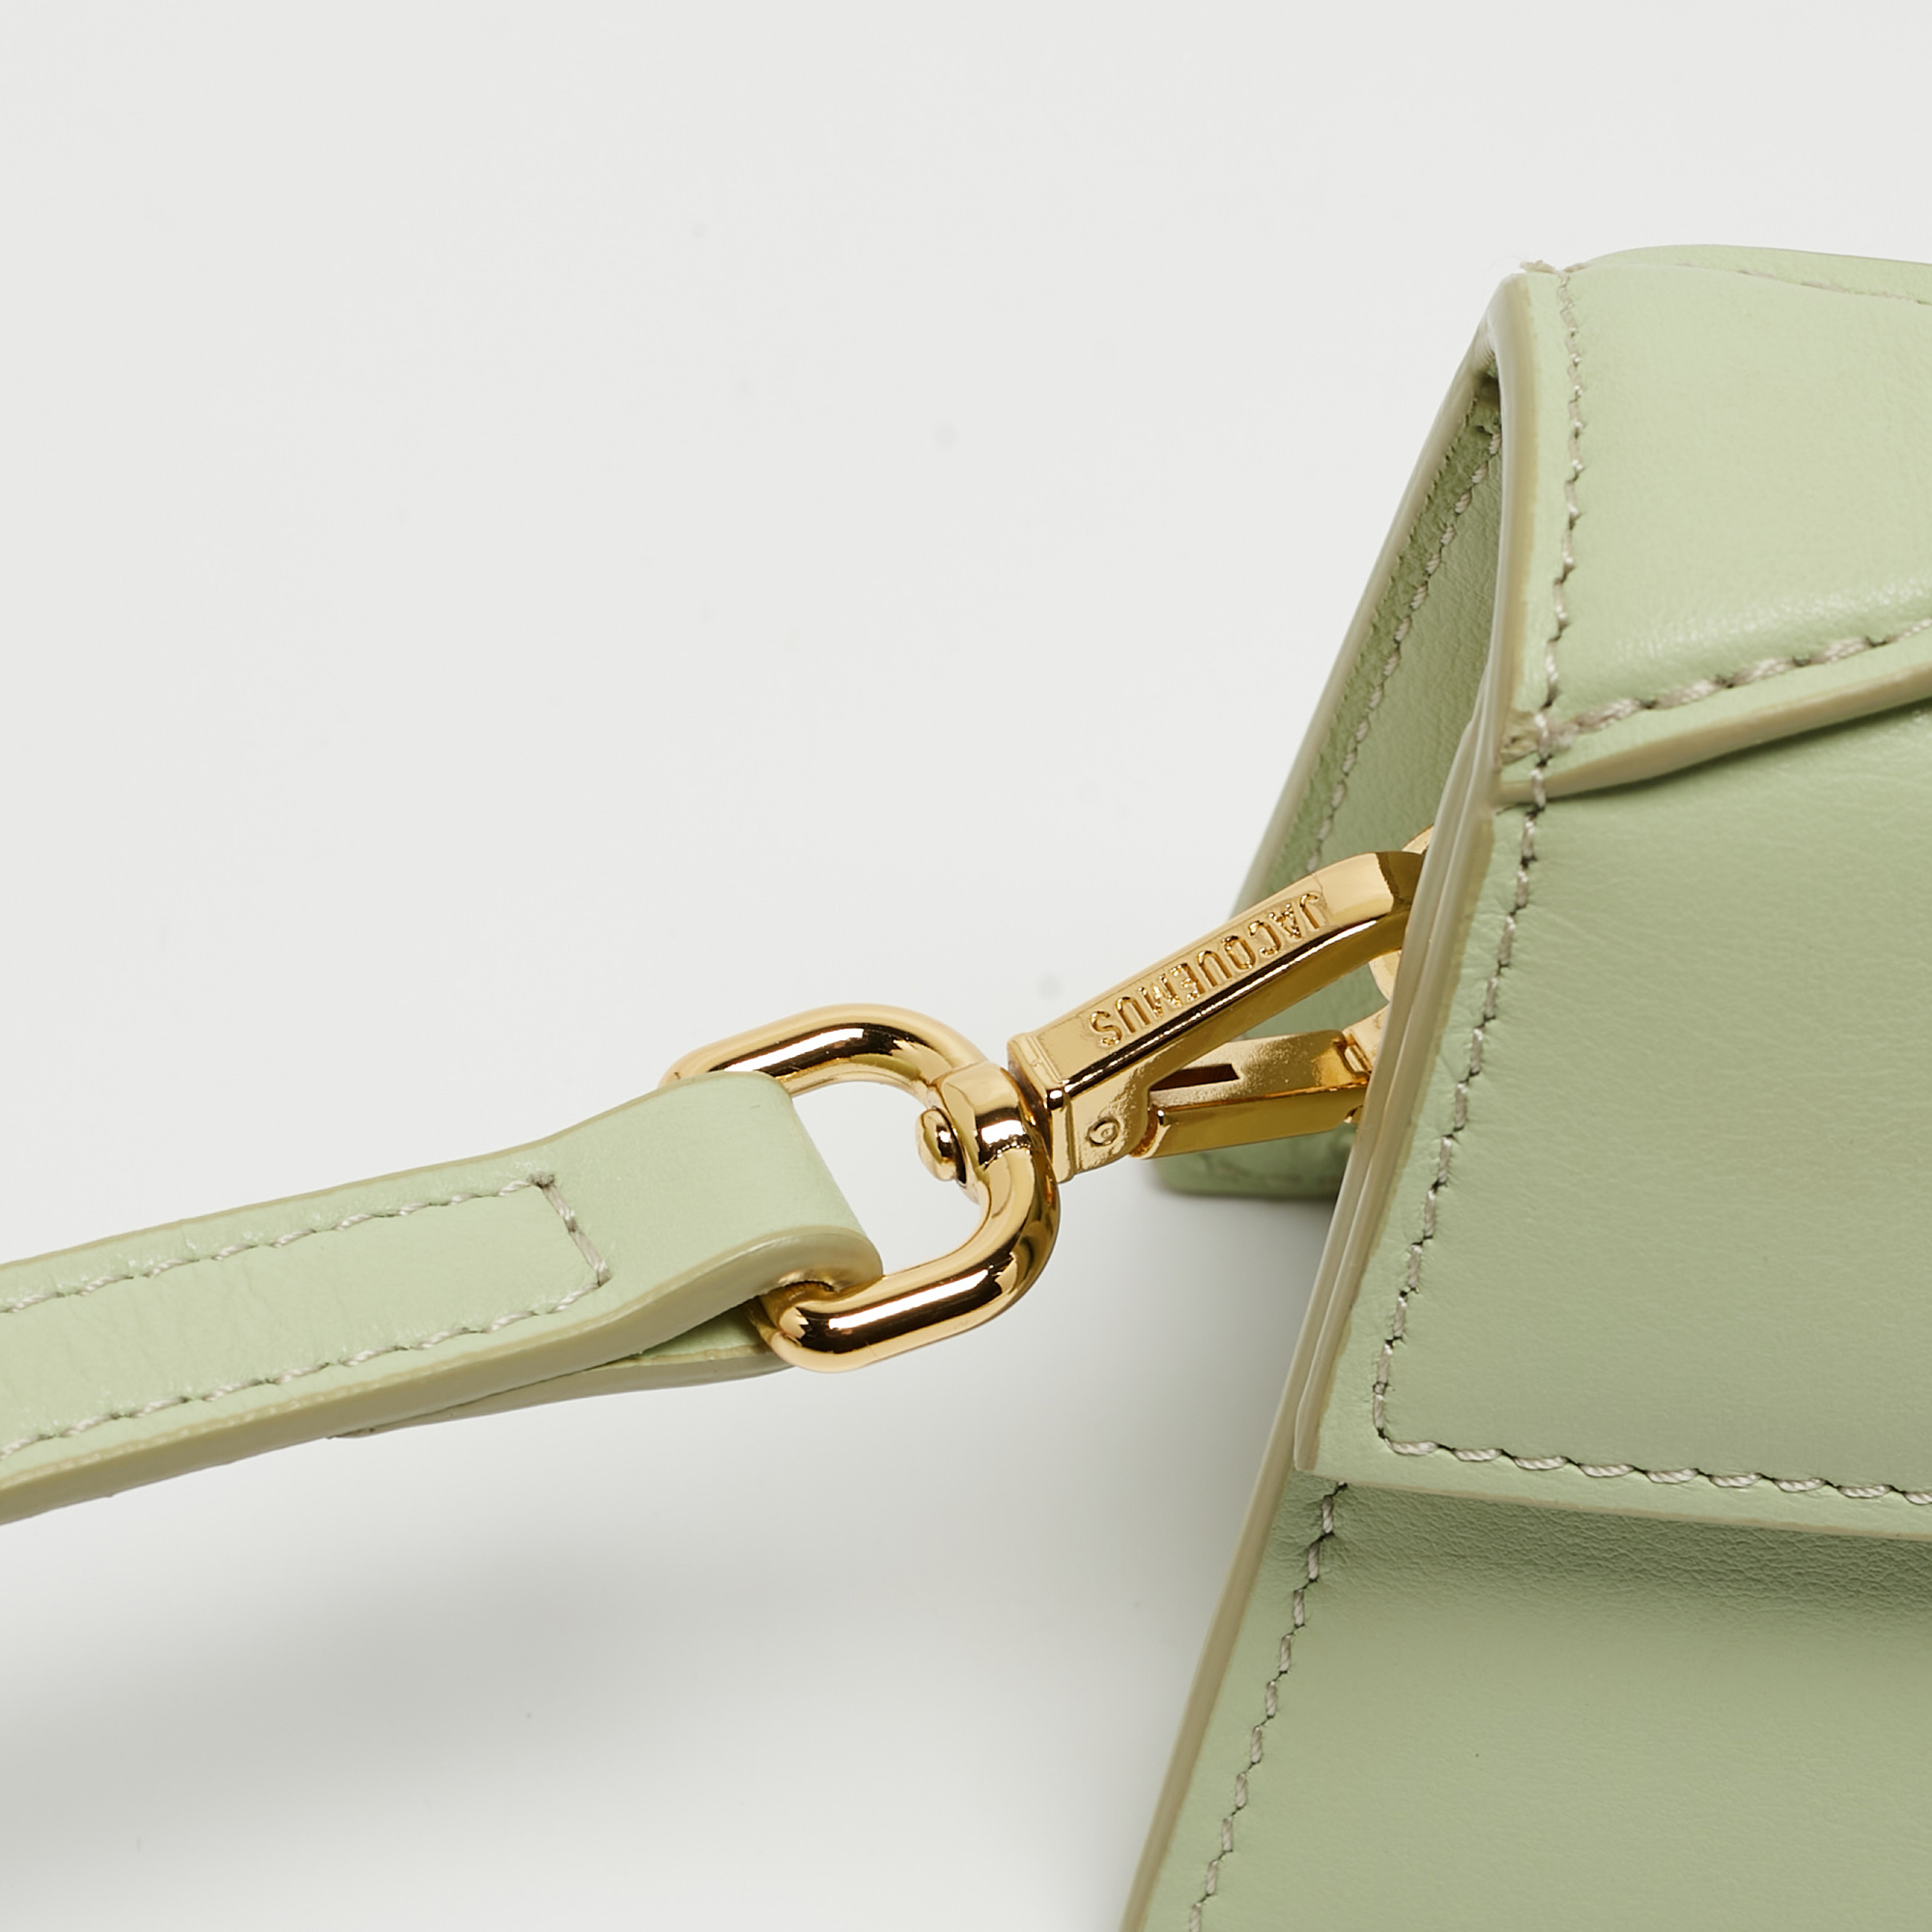 Jacquemus Pale Green Leather Le Bambino Mini Top Handle Bag.